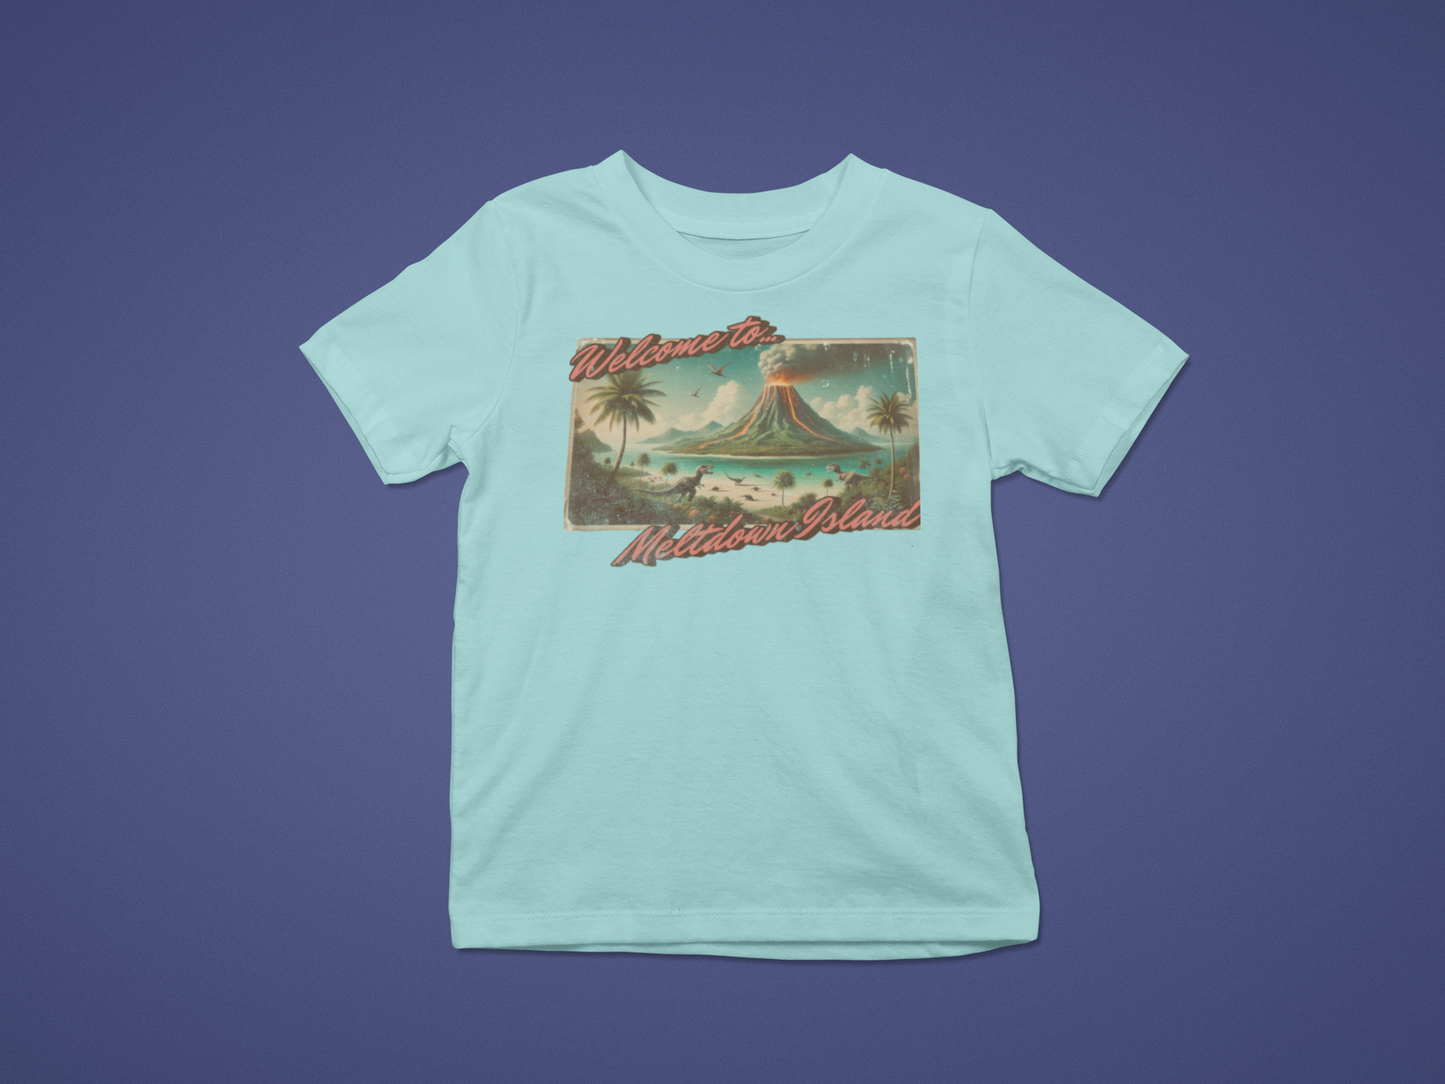 Meltdown Island Toddler T-Shirt